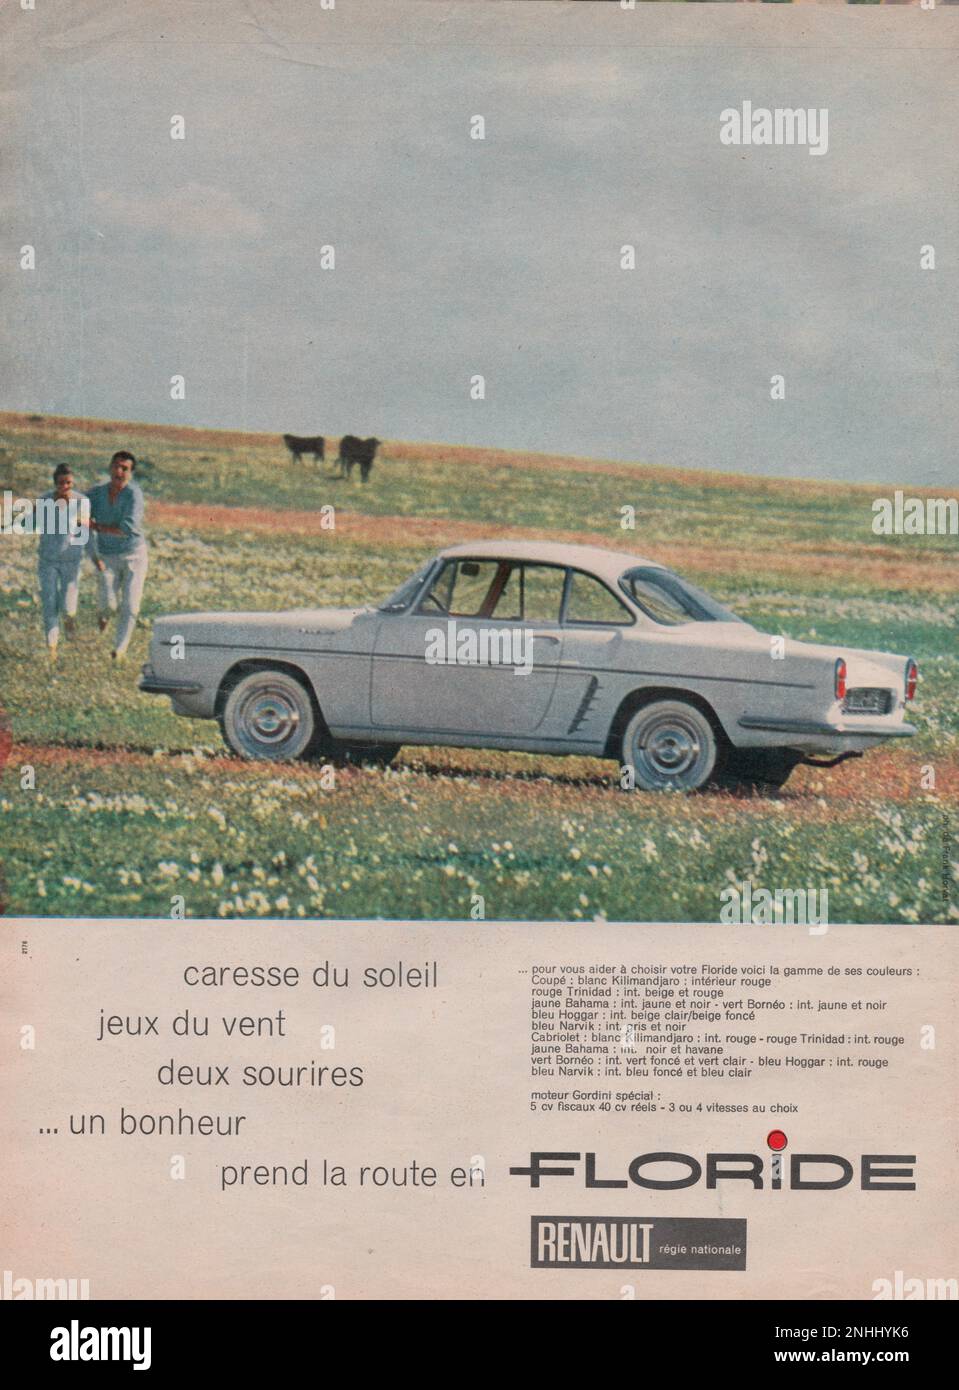 Renault Florida French vintage magazine advertisement Renault Florida advert 1960s Stock Photo